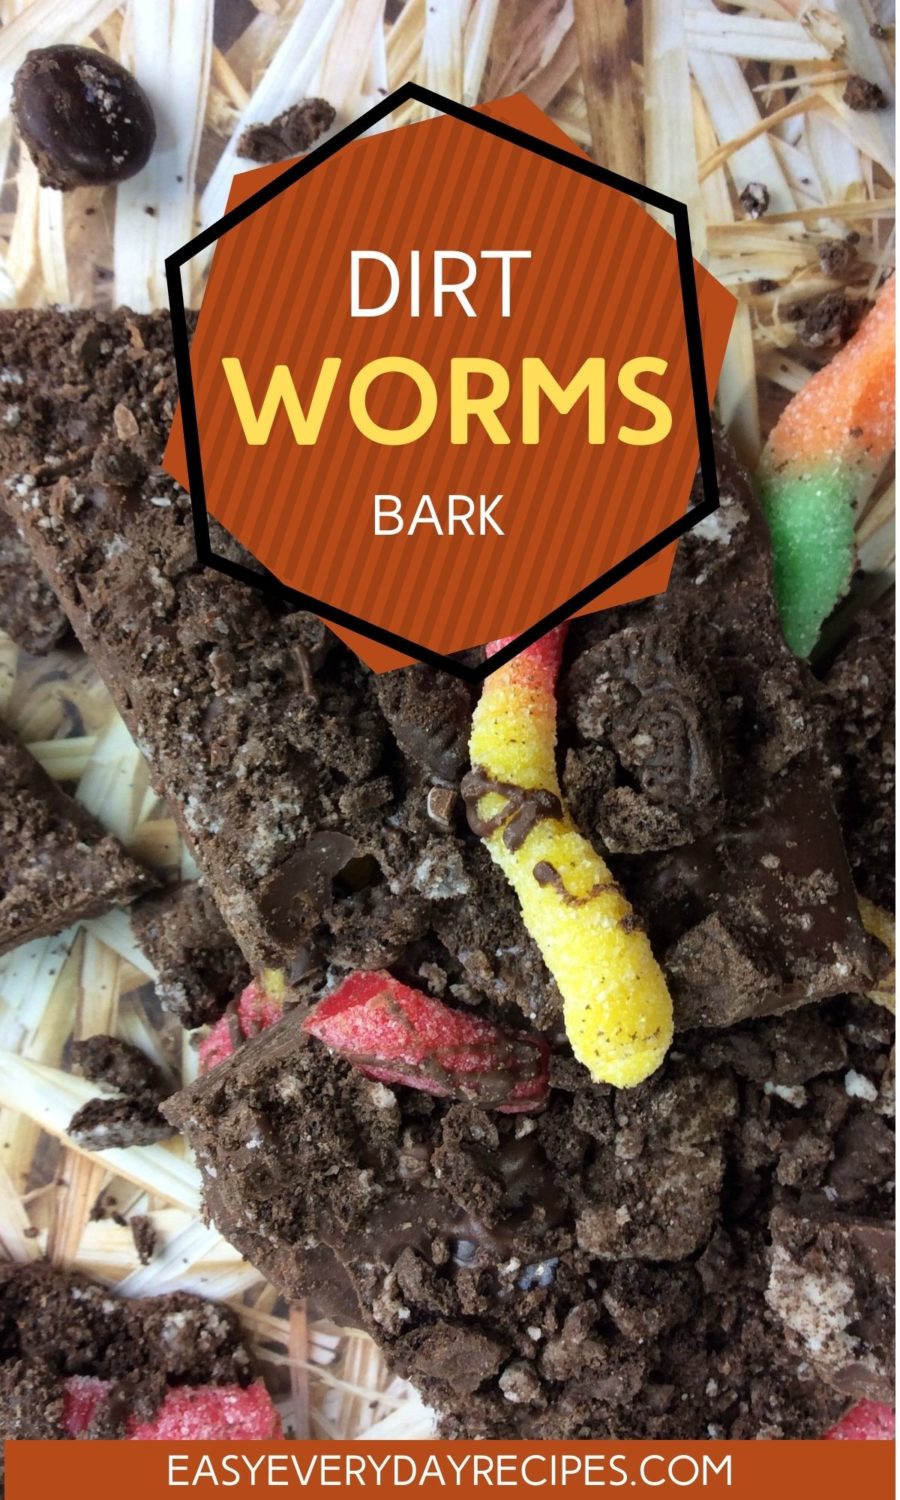 Dirt worms bark.